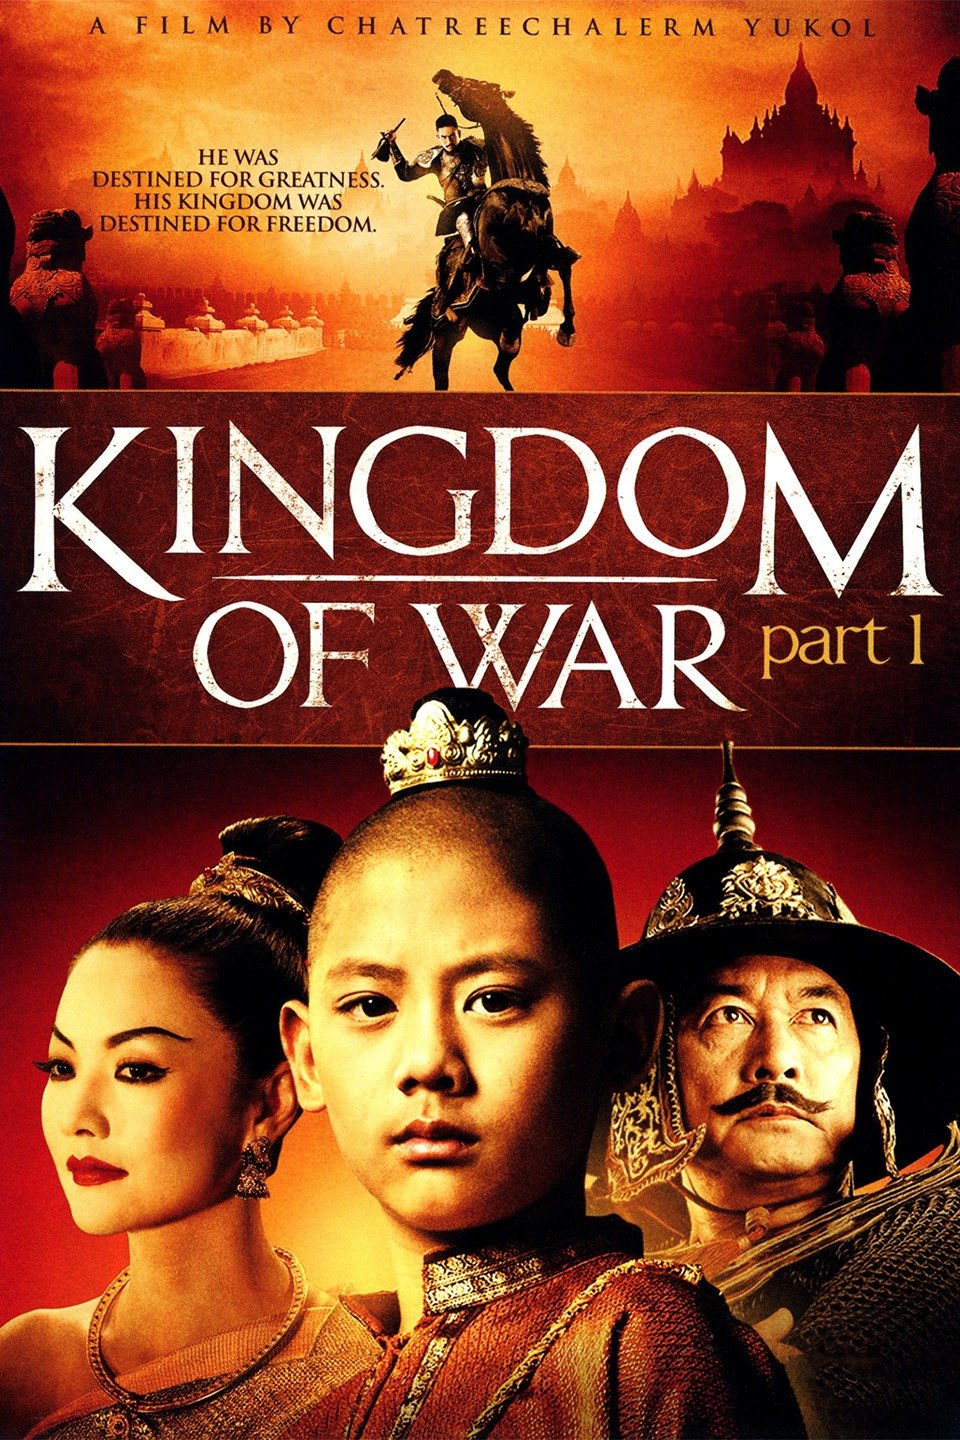 [MINI Super-HQ] King Naresuan (2007) ตำนานสมเด็จพระนเรศวรมหาราช ภาค 1 องค์ประกันหงสา [1080p] [พากย์ไทย 5.1] [บรรยายไทย + อังกฤษ] [เสียงไทย + ซับอังไทย] [OPENLOAD]